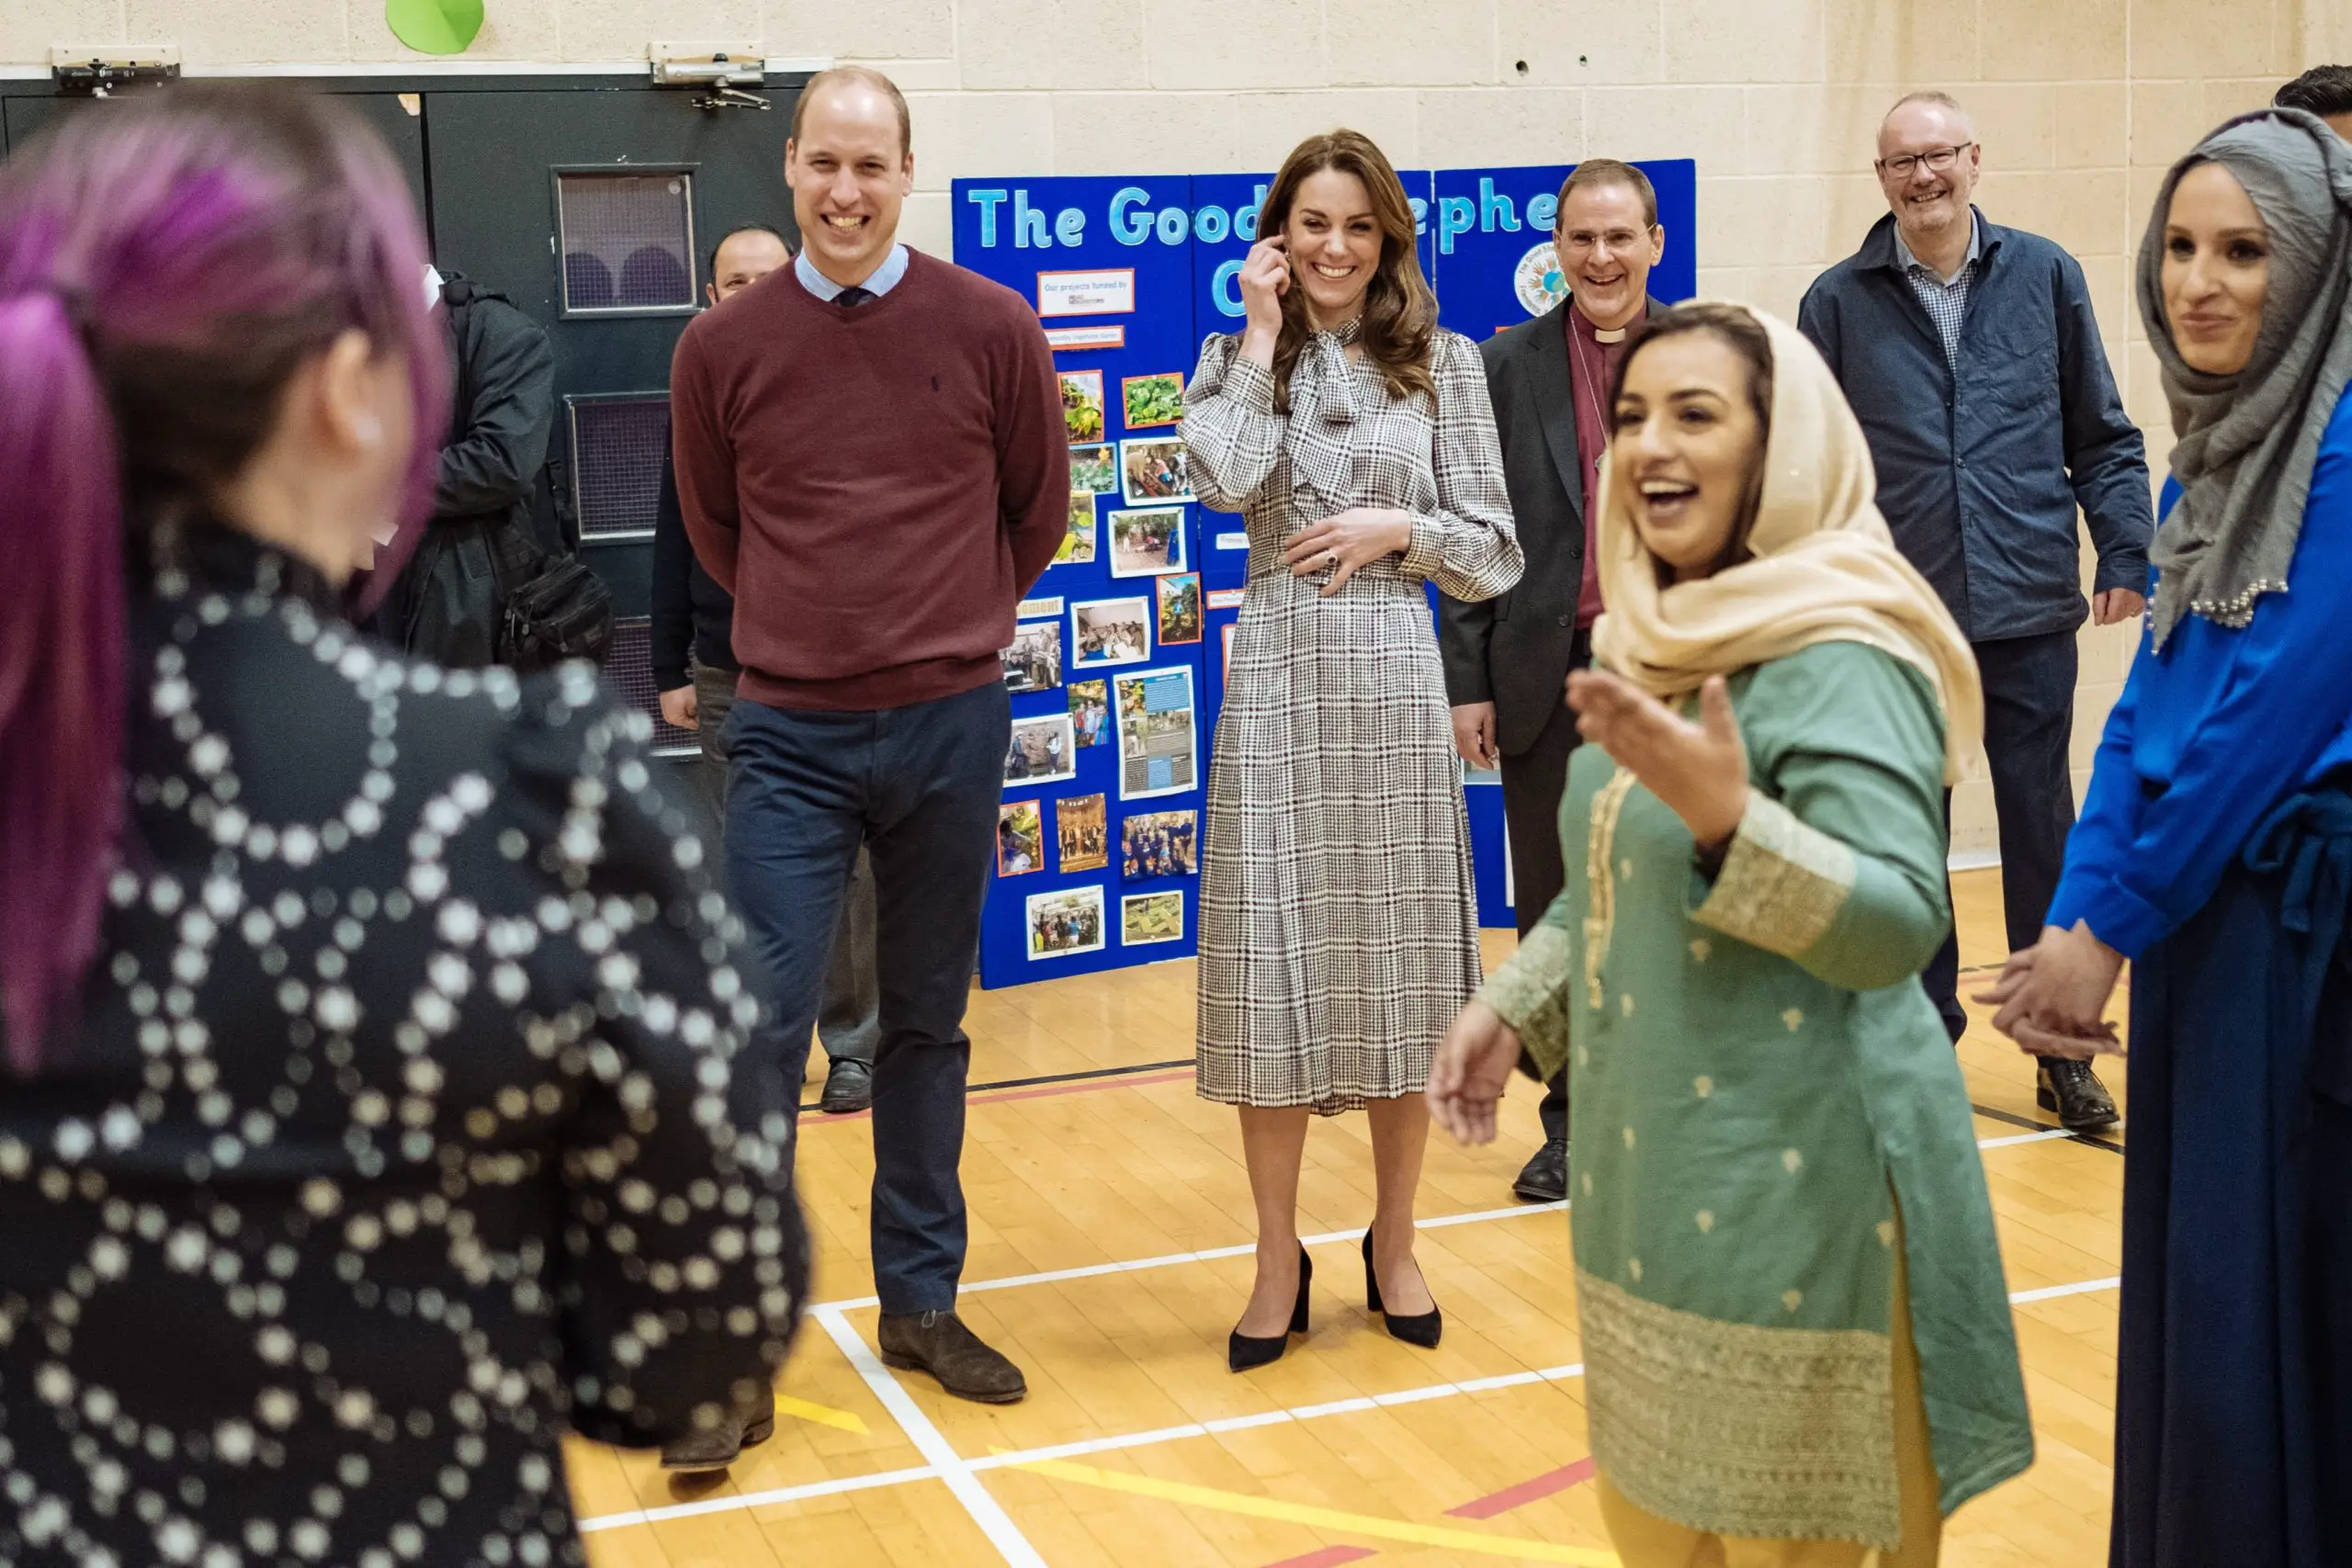 The Duke and Duchess of Cambridge visited Bradford